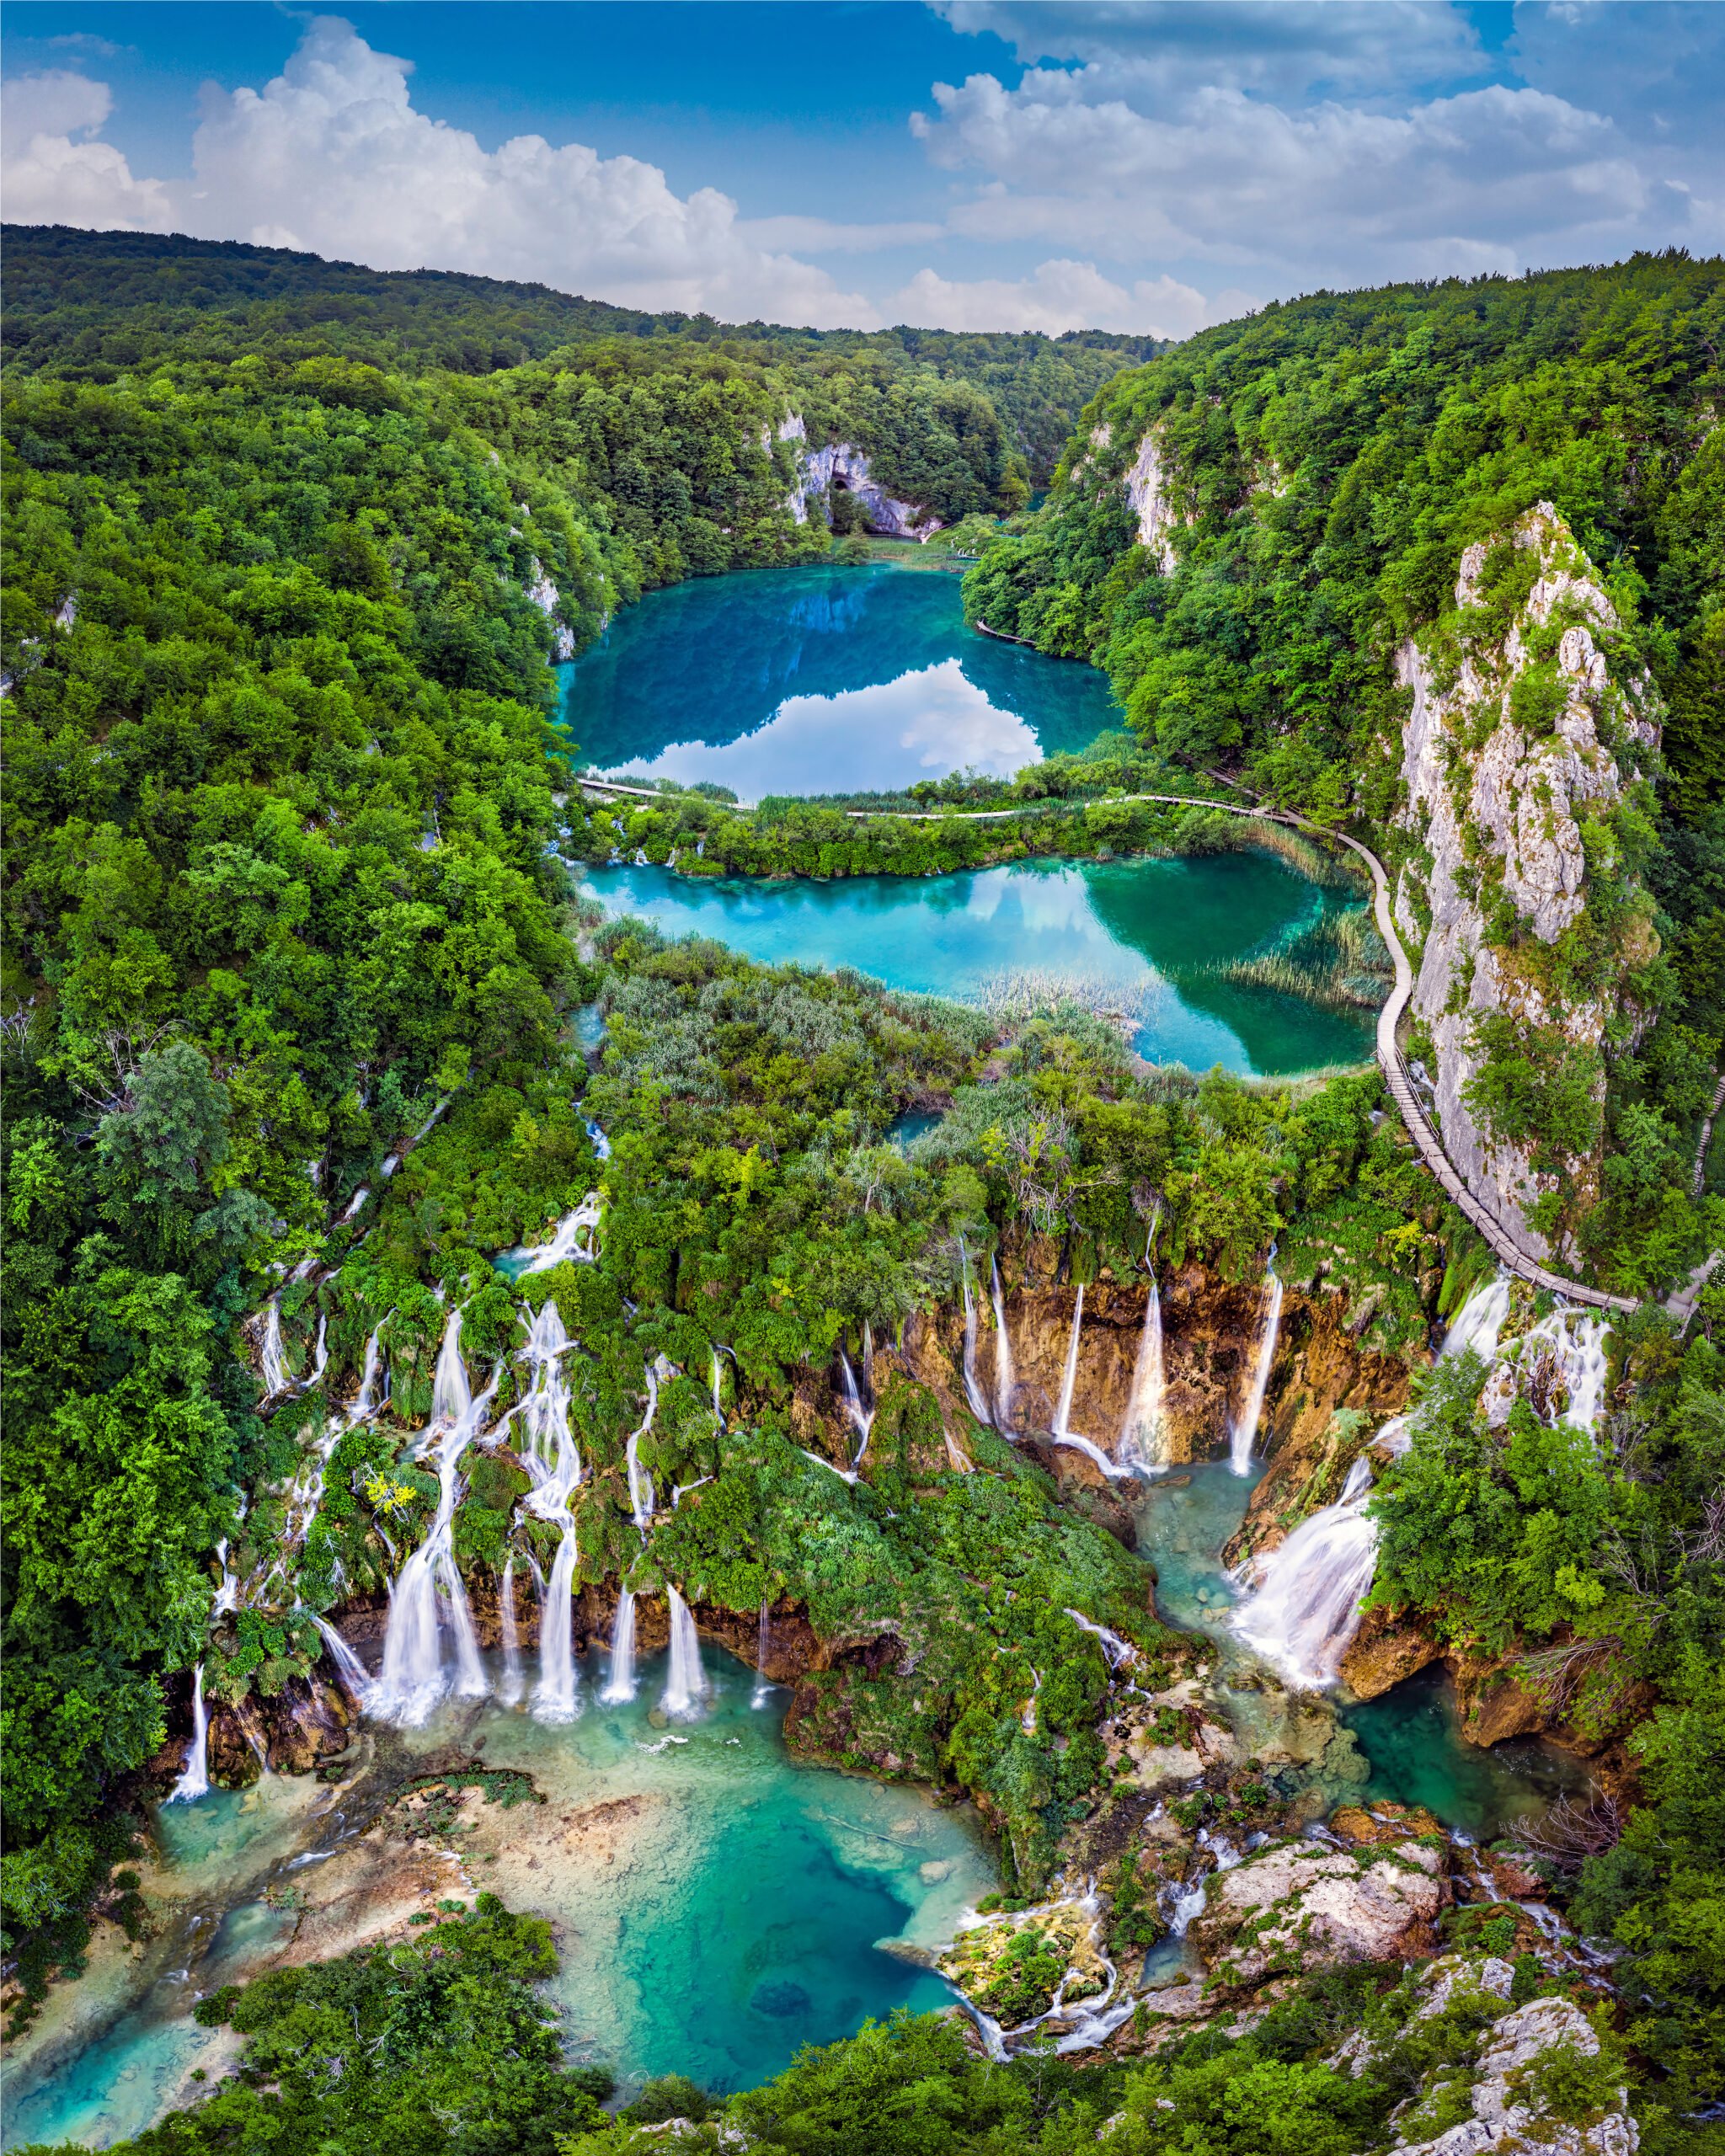 Plitvice Lakes, Croatia - Europe's 10 Most Stunning Lakes